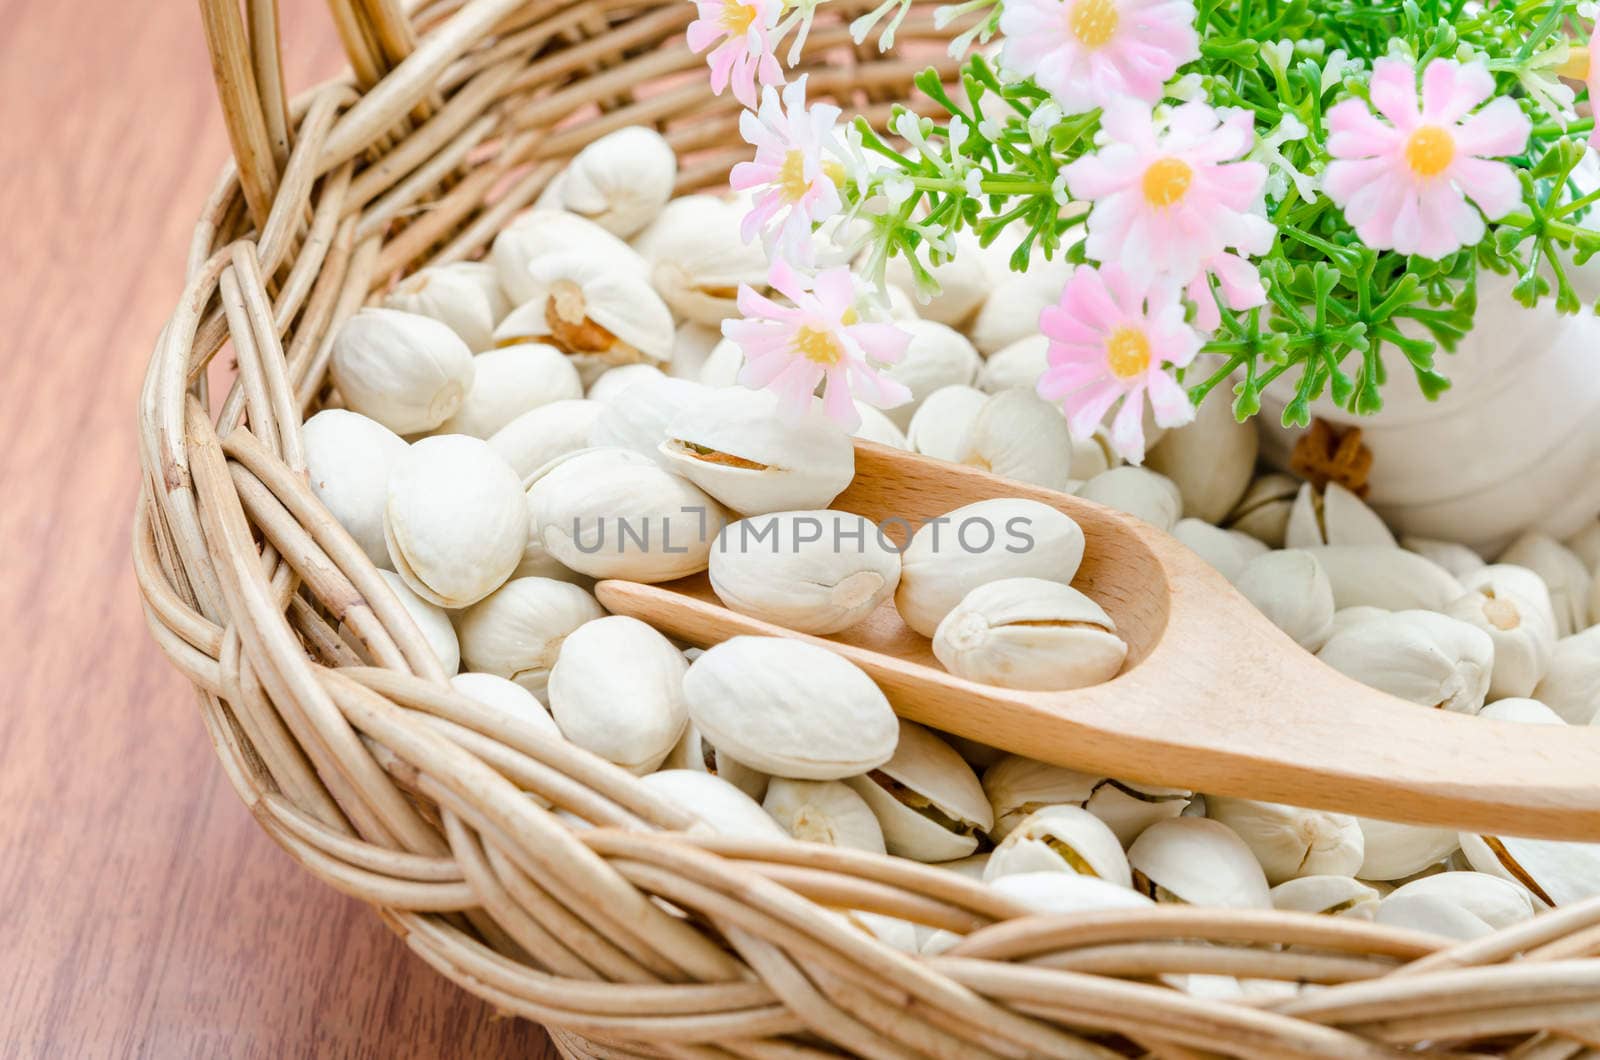 Pistachio nuts in wood basket. by Gamjai